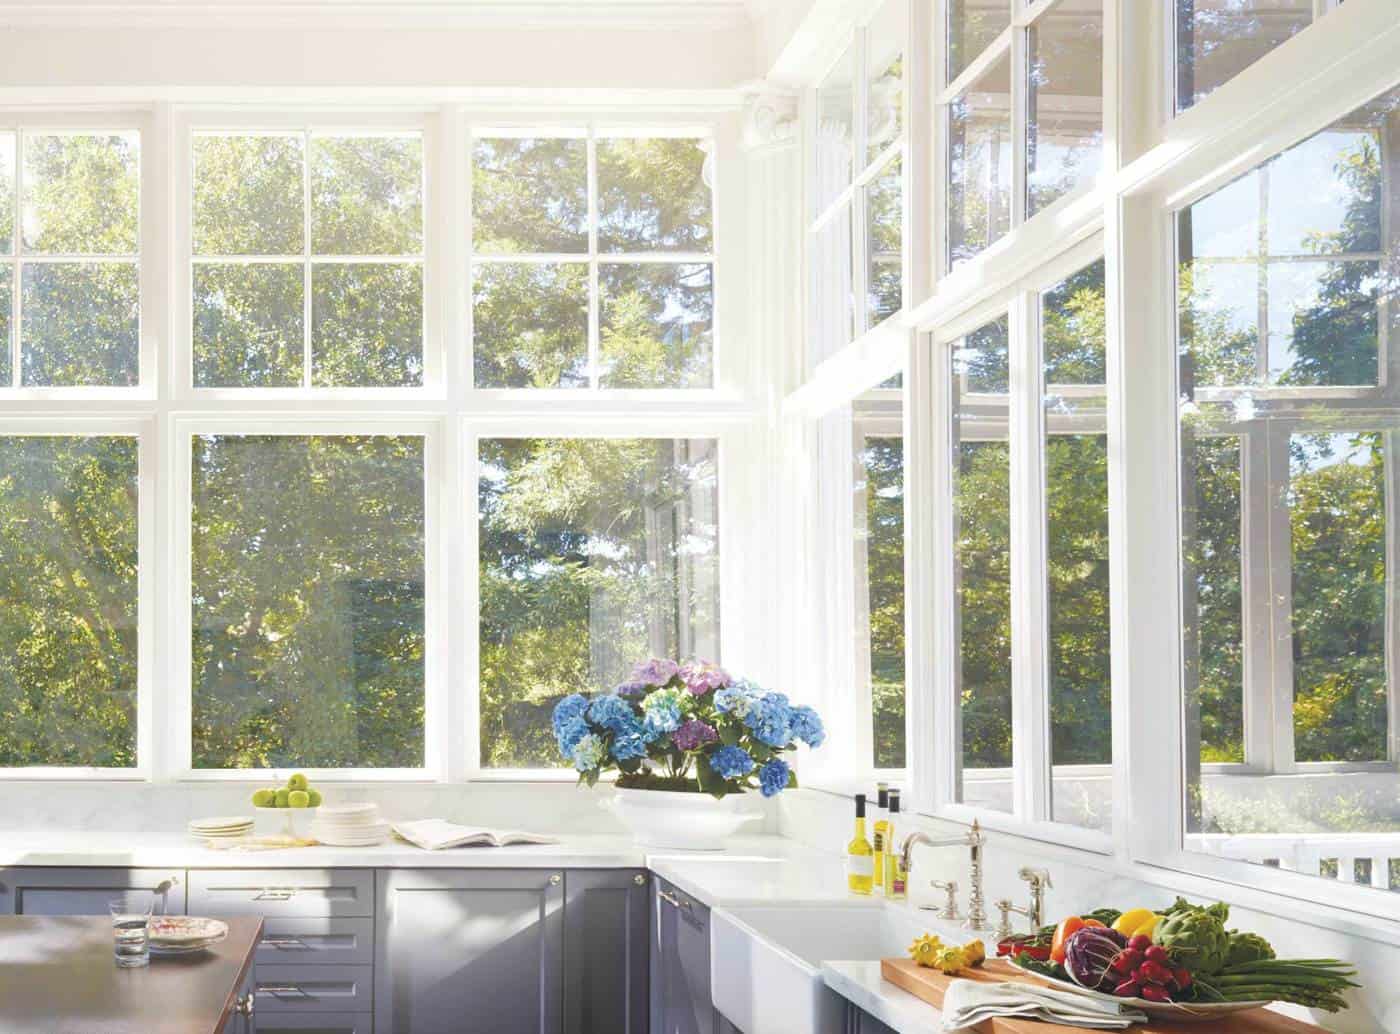 Luxurious kitchen before installing custom window treatments 